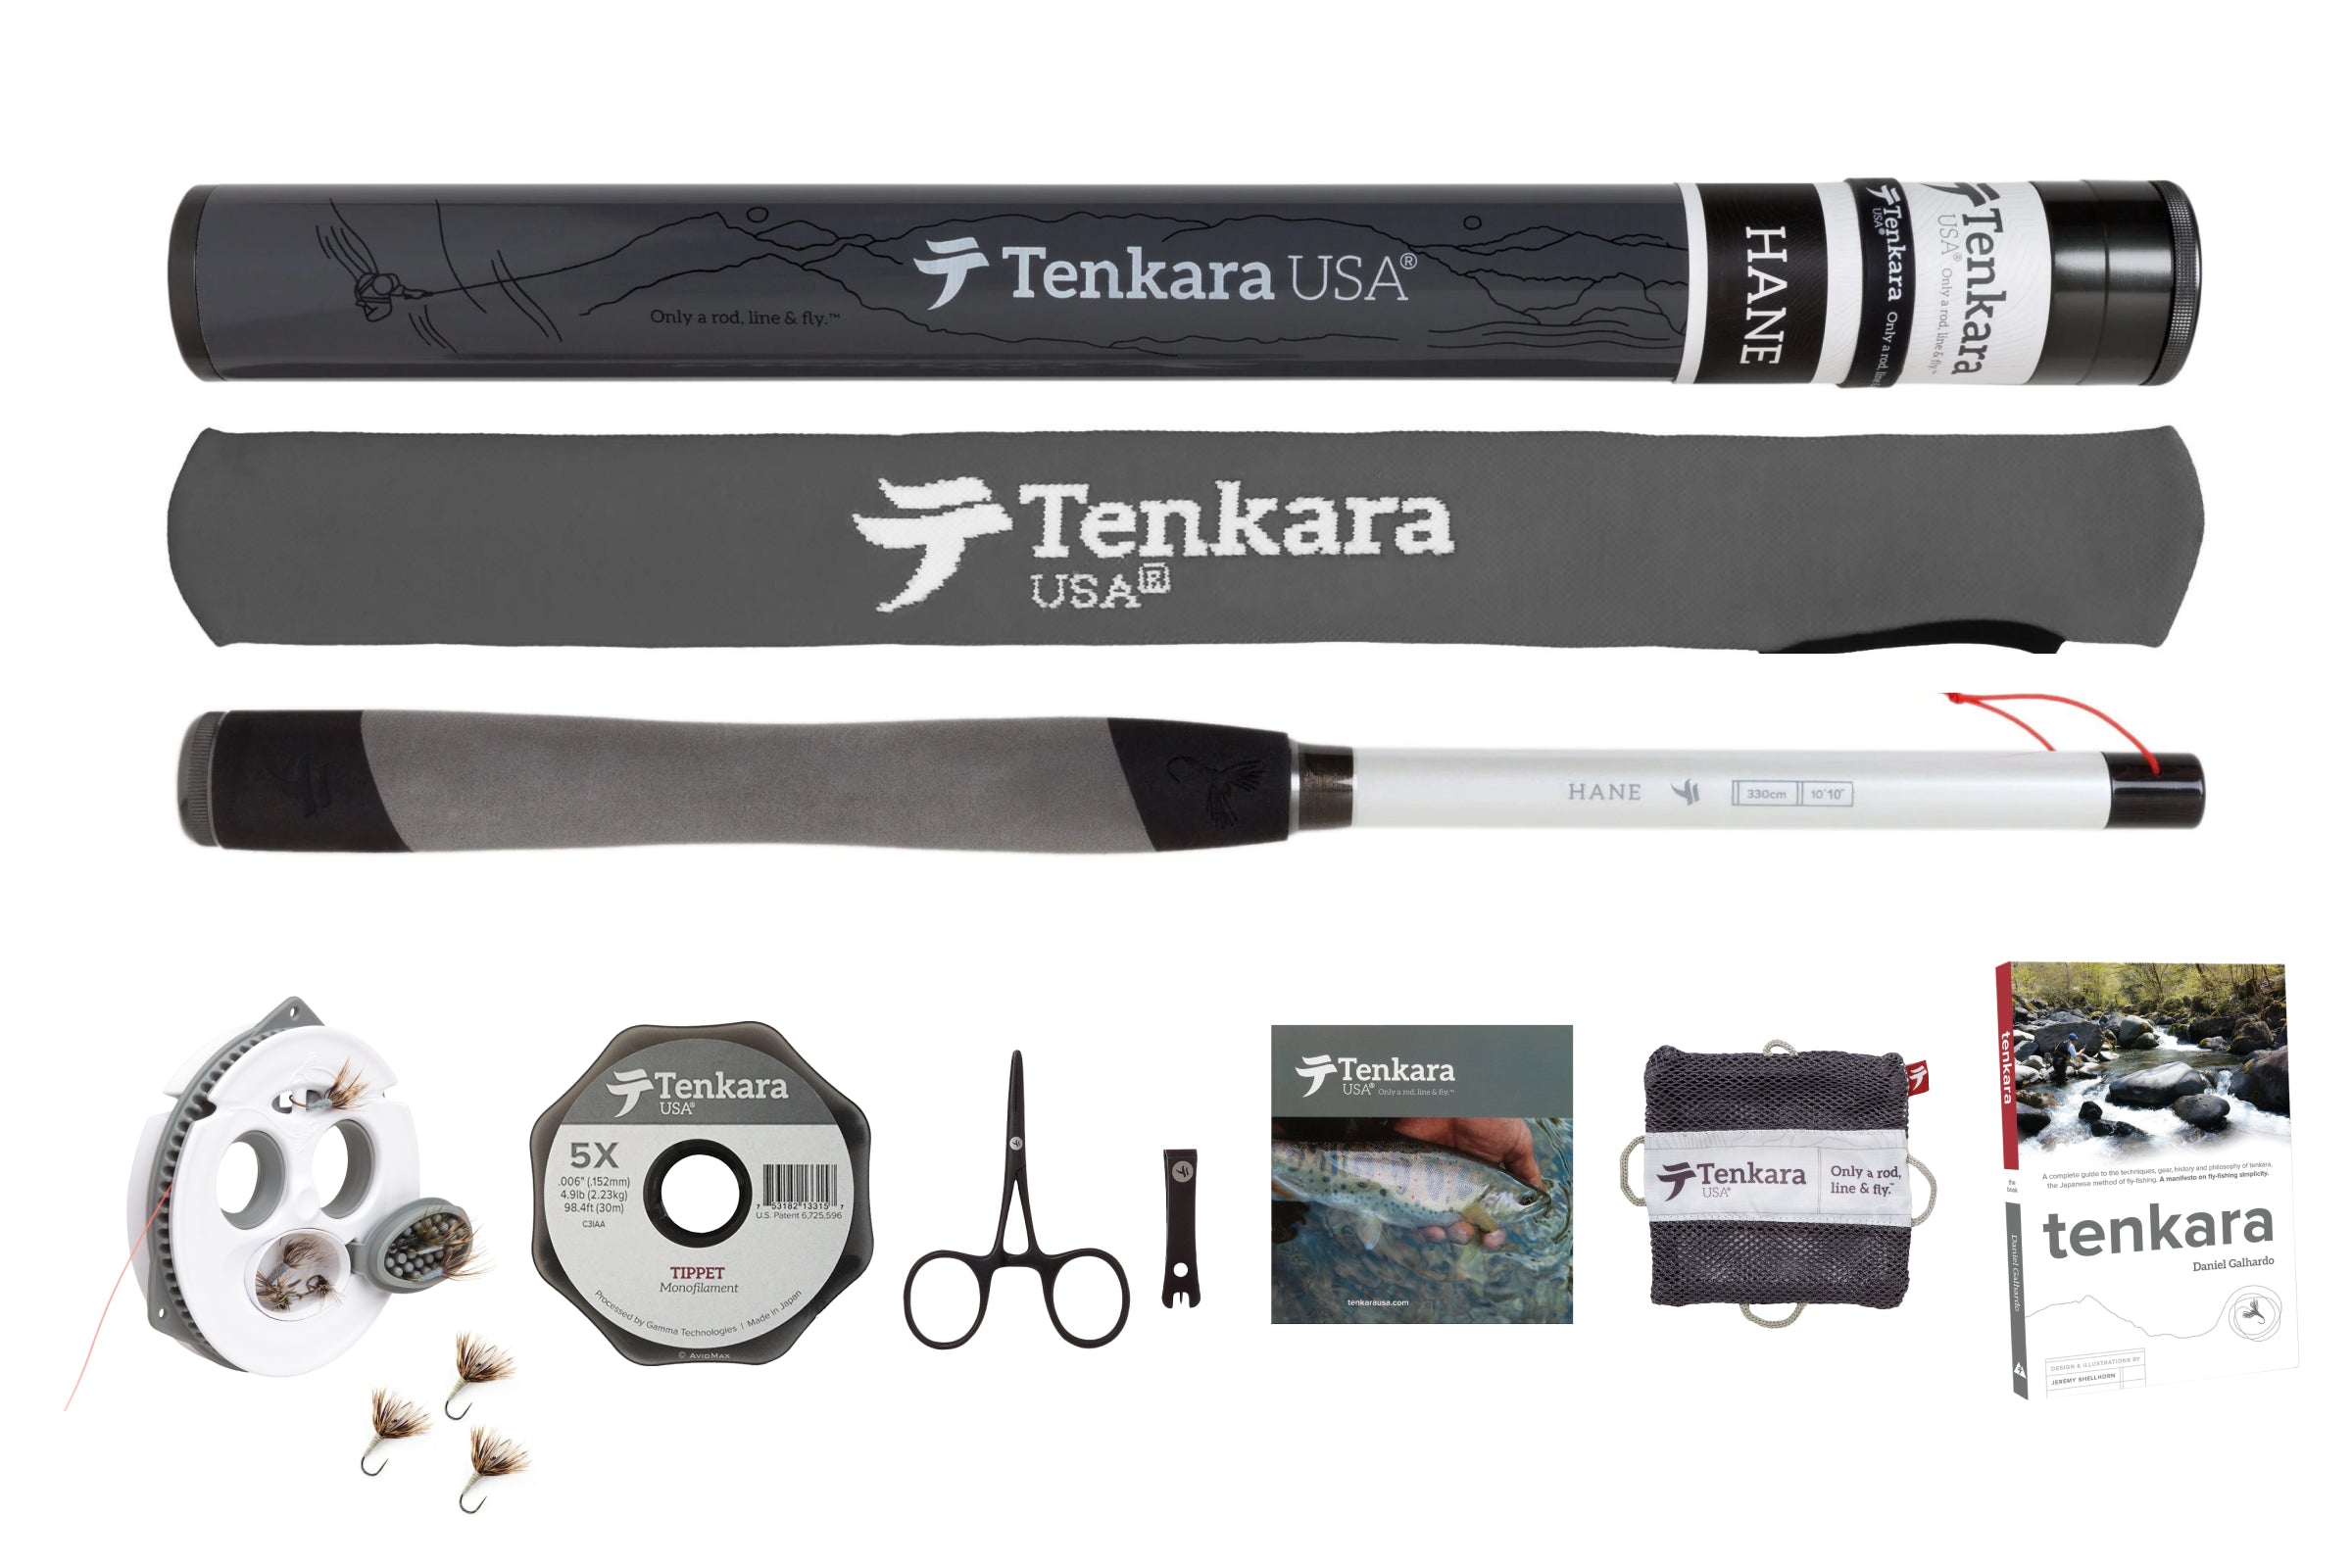 The North River: A Tenkara Survival Kit